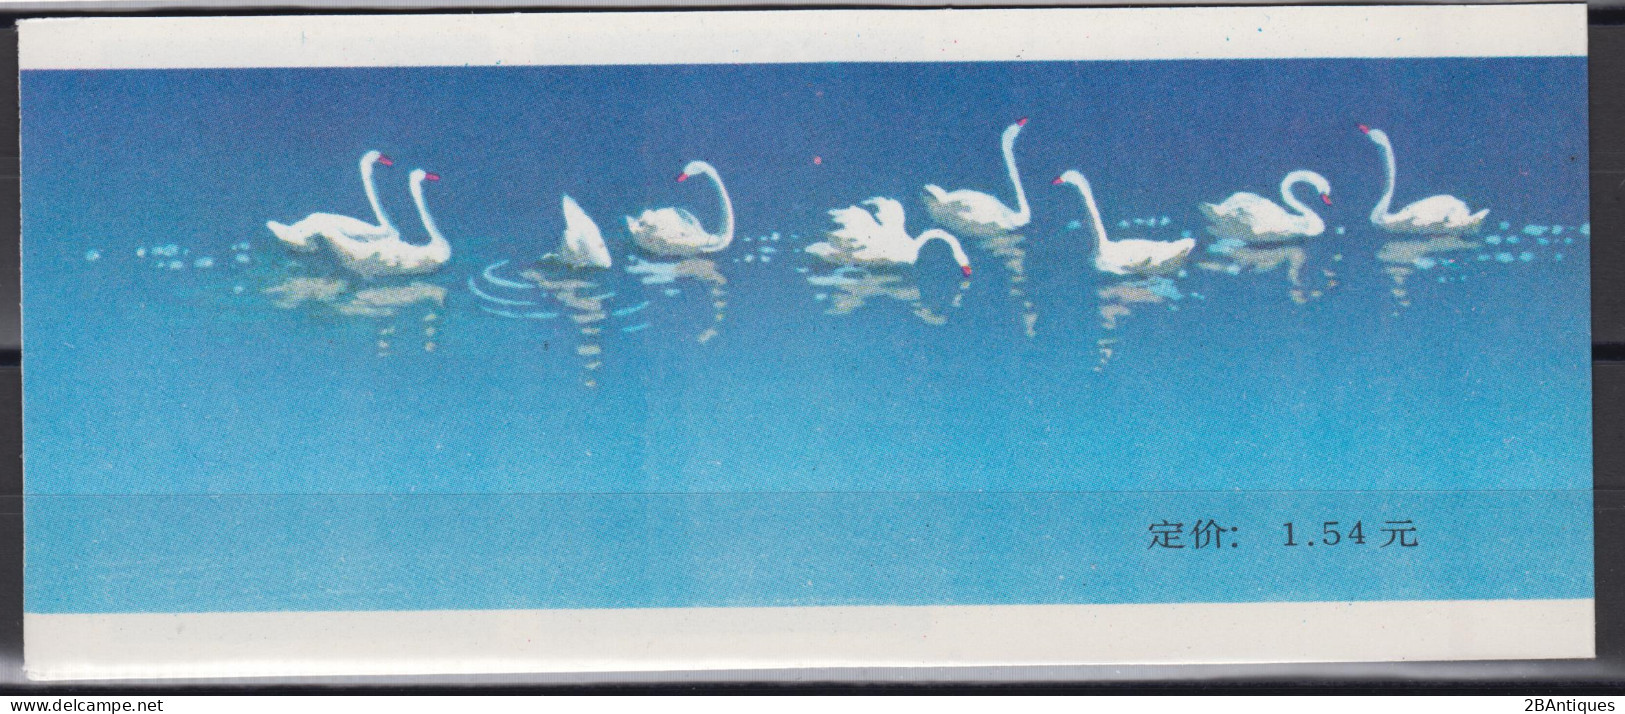 PR CHINA 1983 - Stamp Booklet Swan MNH** XF OG - Neufs